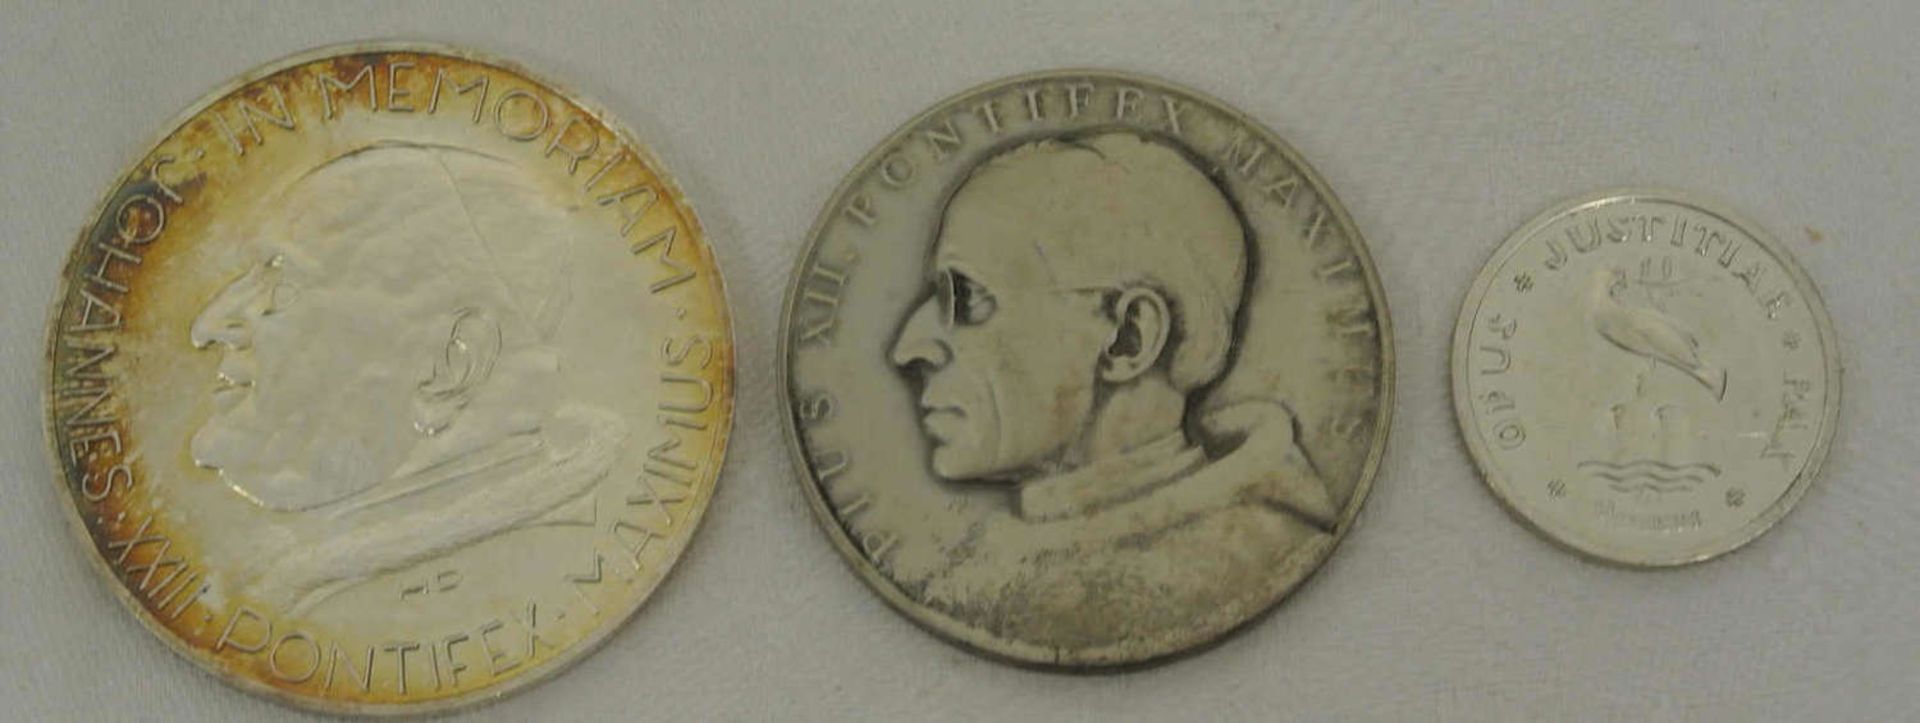 3 Silbermedaillen Vatikan, bestehend aus 1x Pontifex Maximus 1963, 1x Pontifex Maximus 1958, sowie